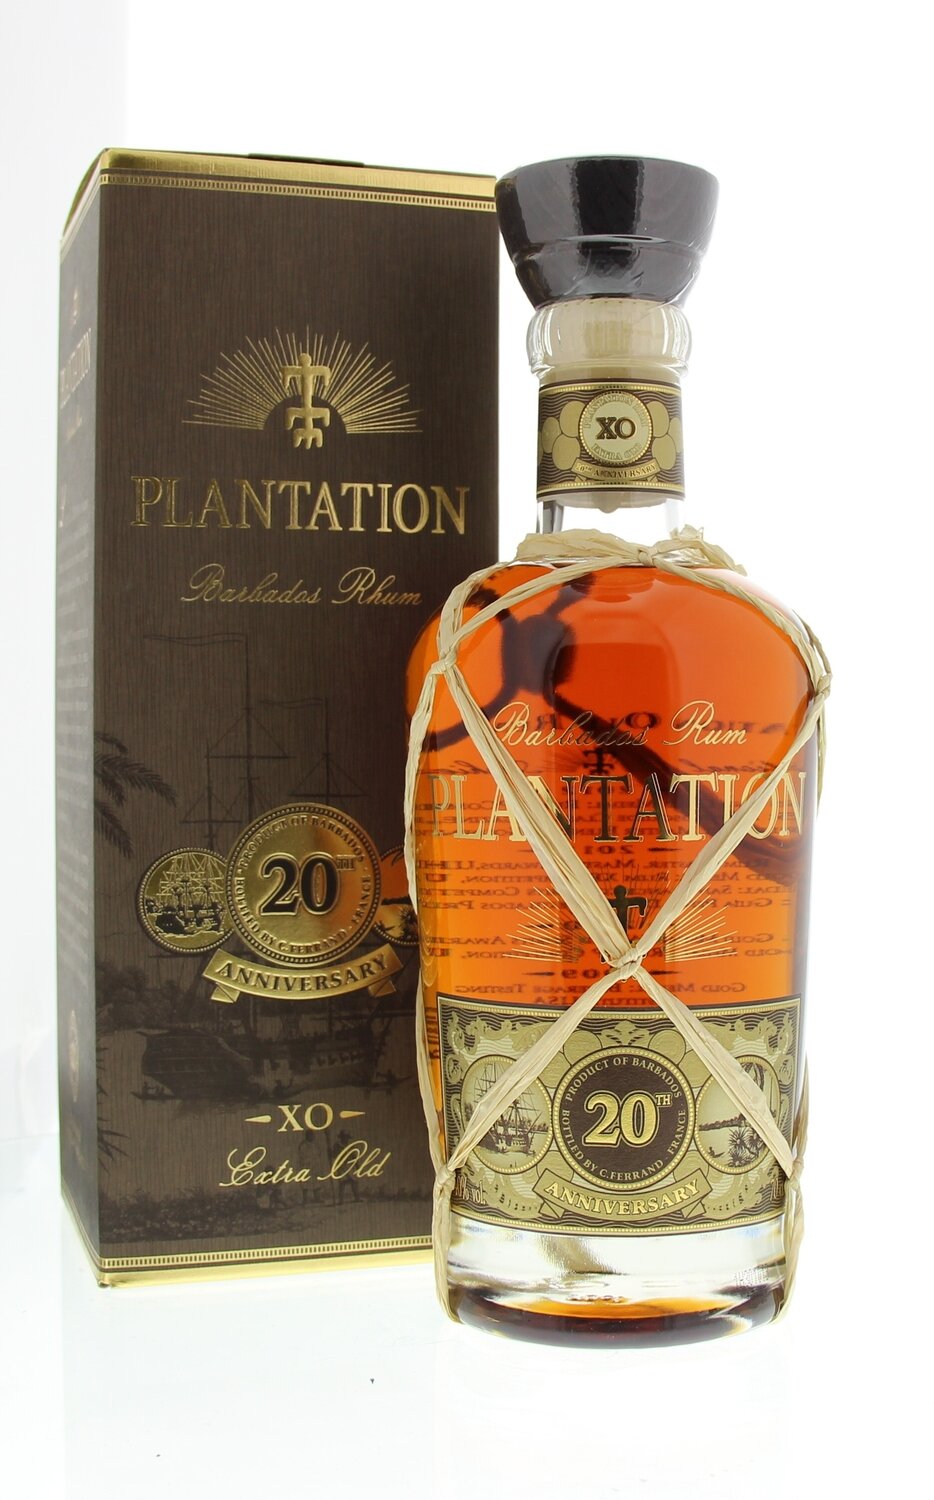 Plantation Rum Barbados XO Extra 20th Anniversary